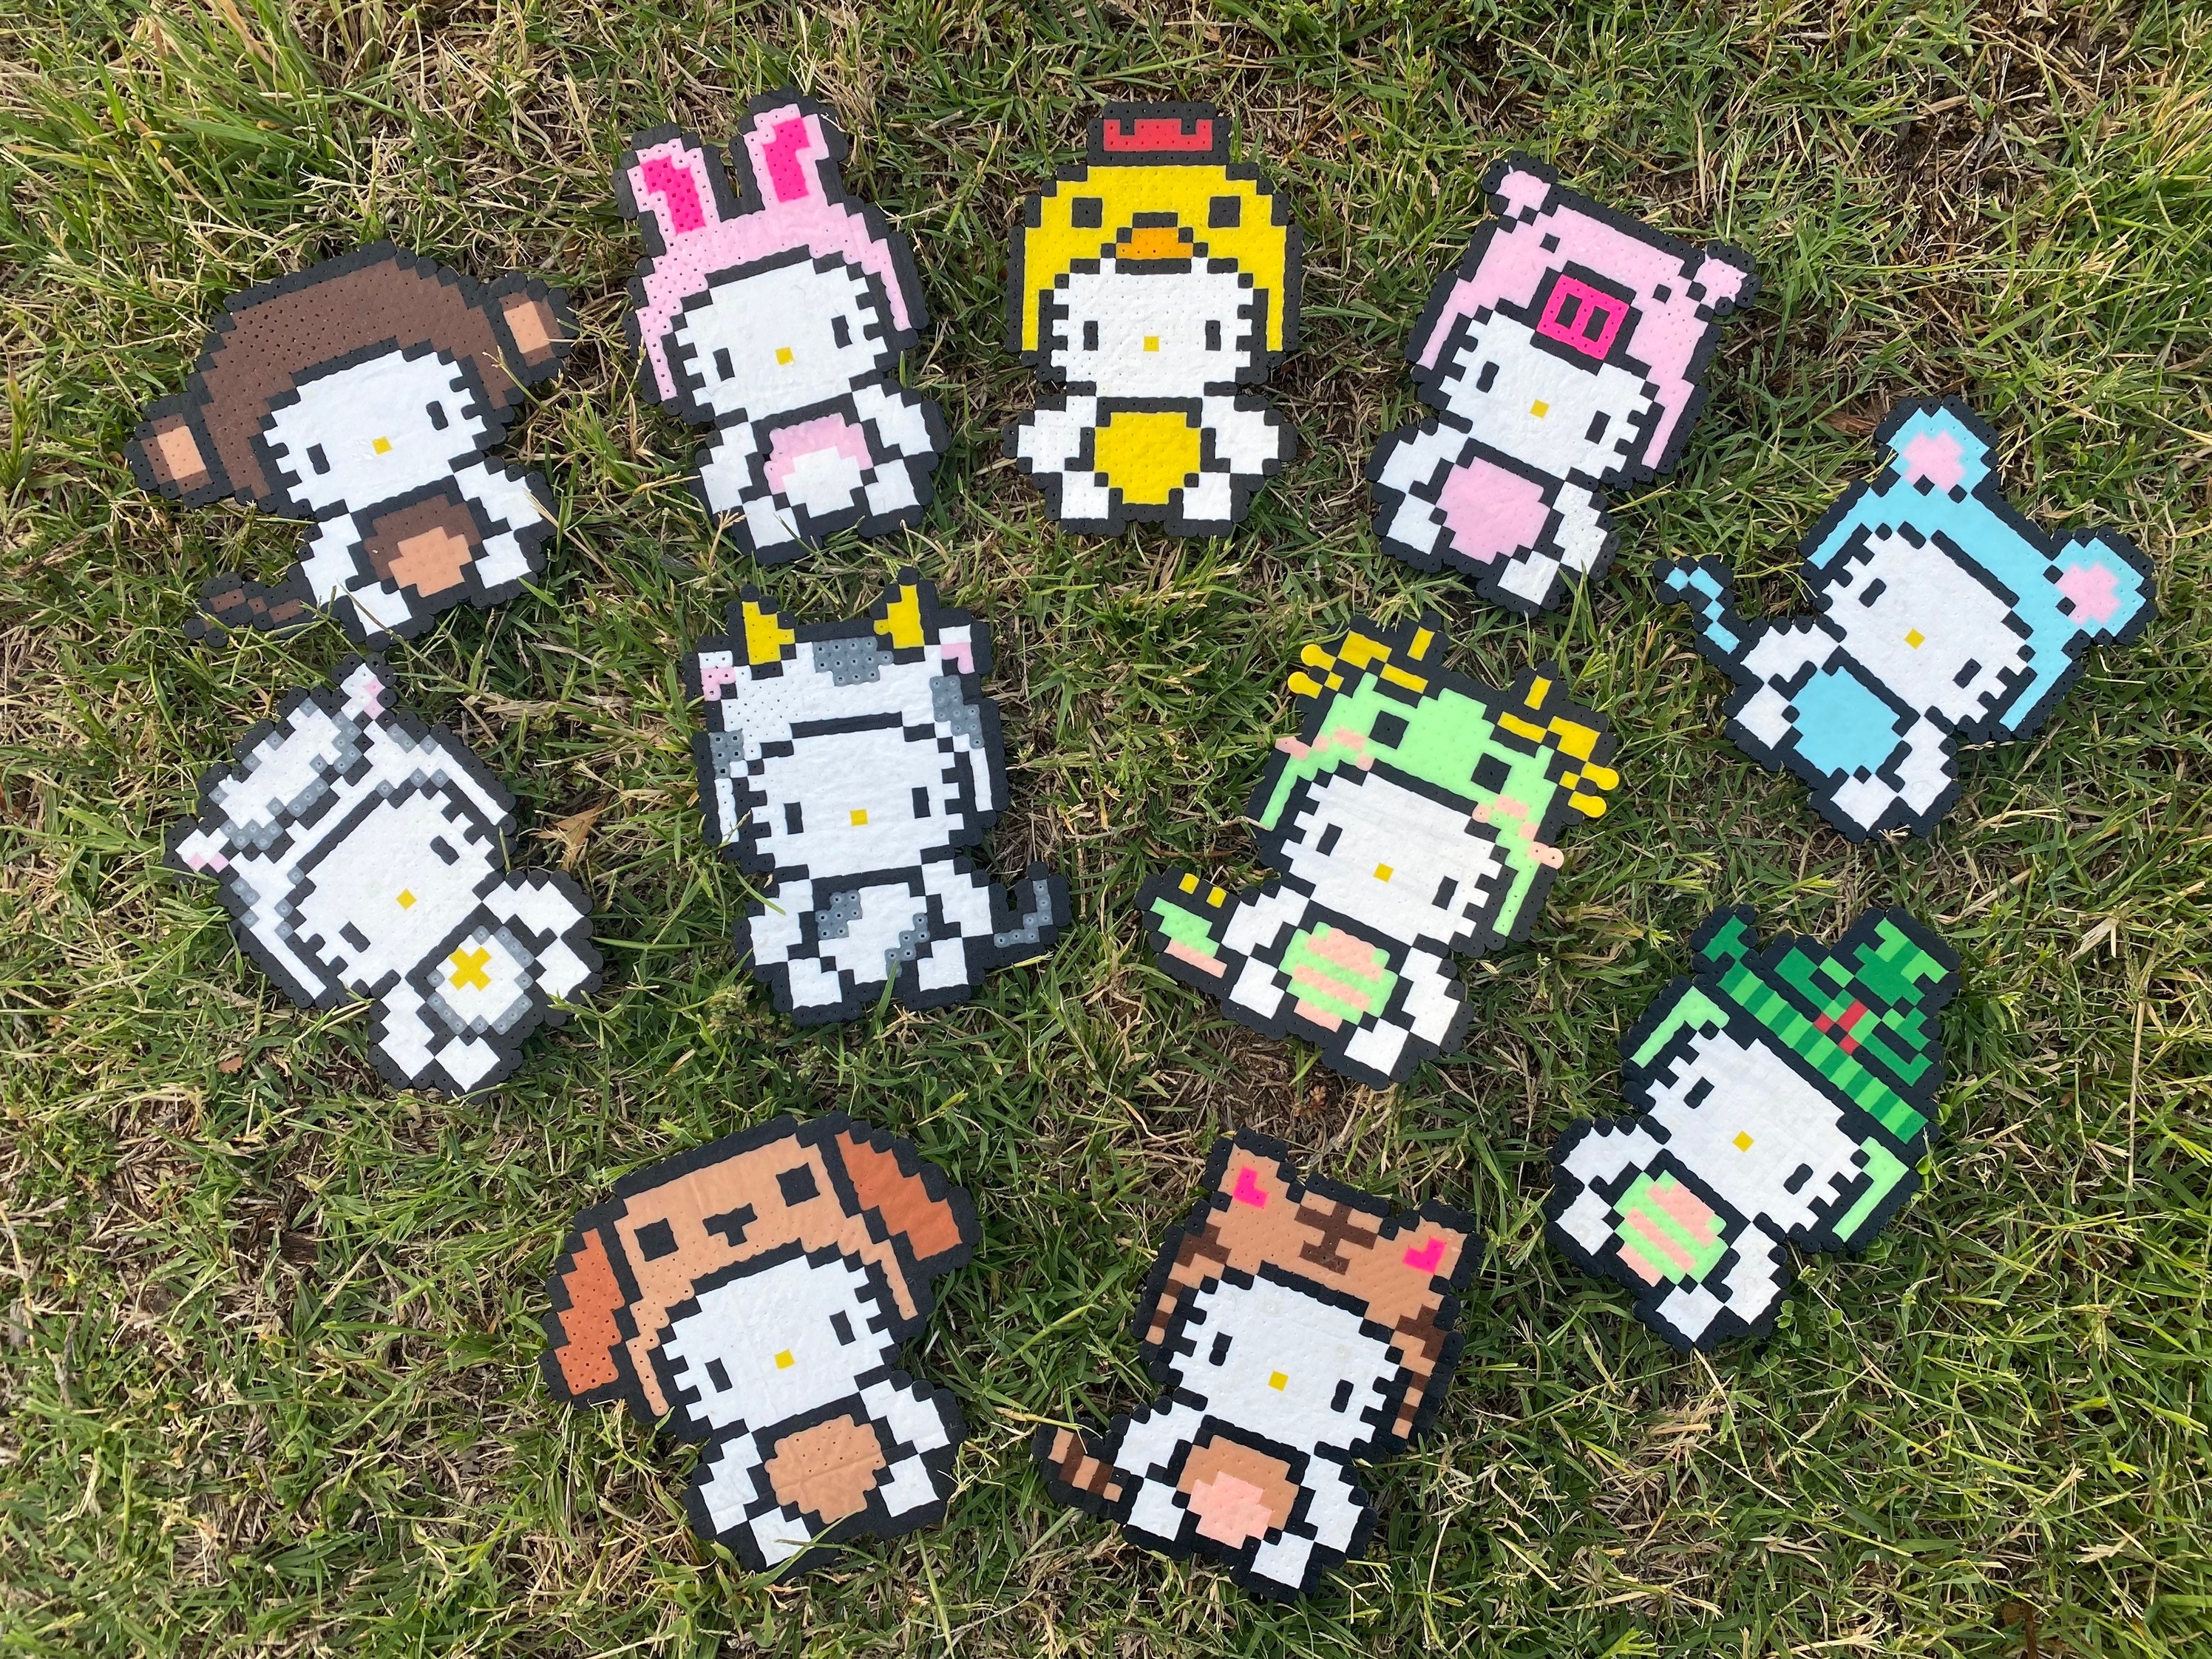 HK - Hello Kitty And Mimmy Perler Bead Things by worldofcaitlyn on